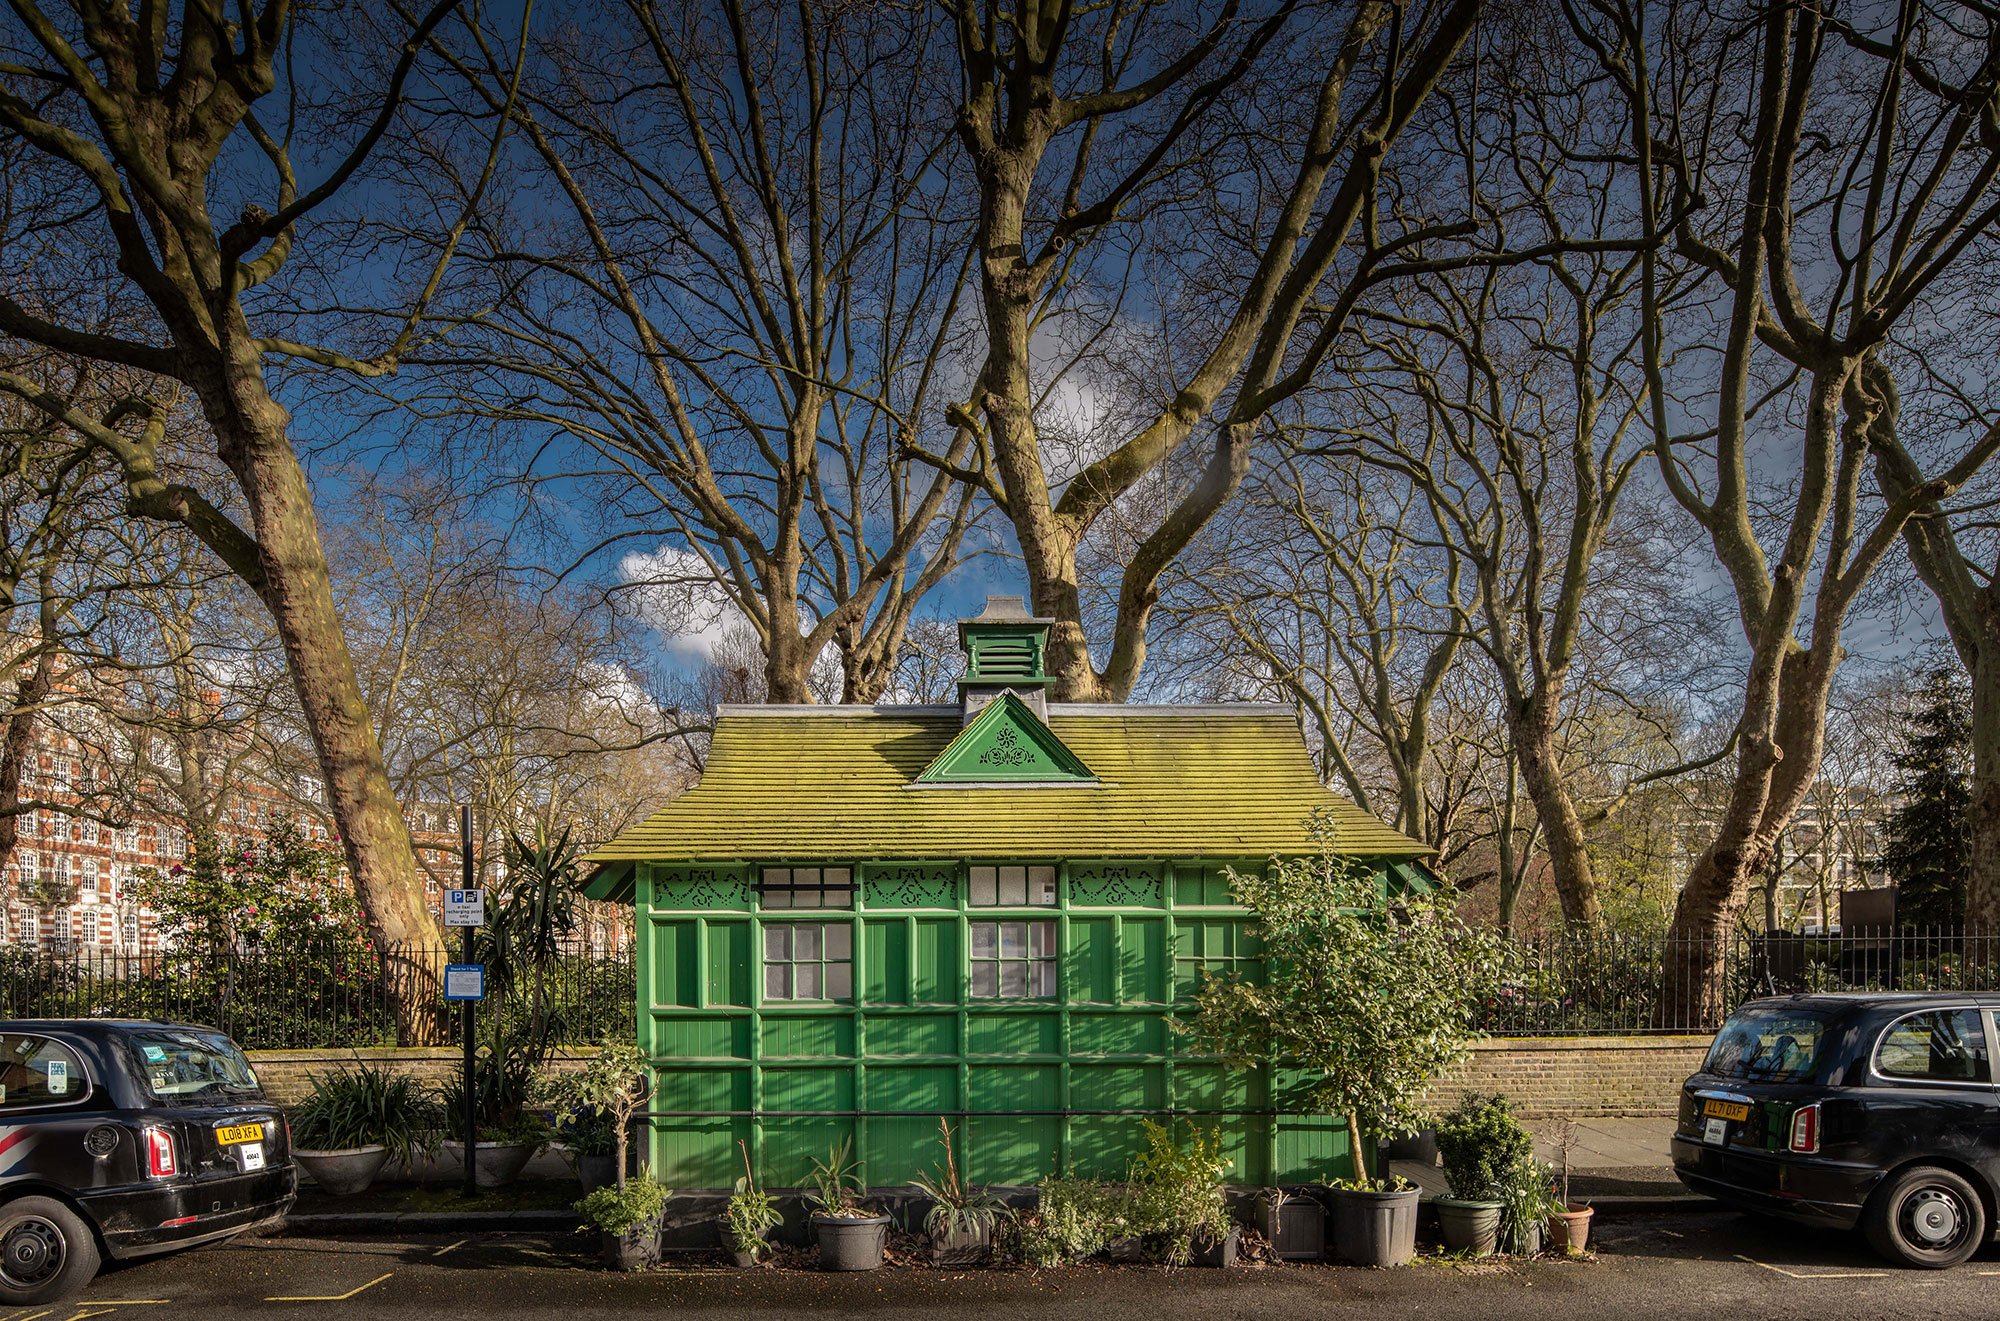 Green wooden shelter